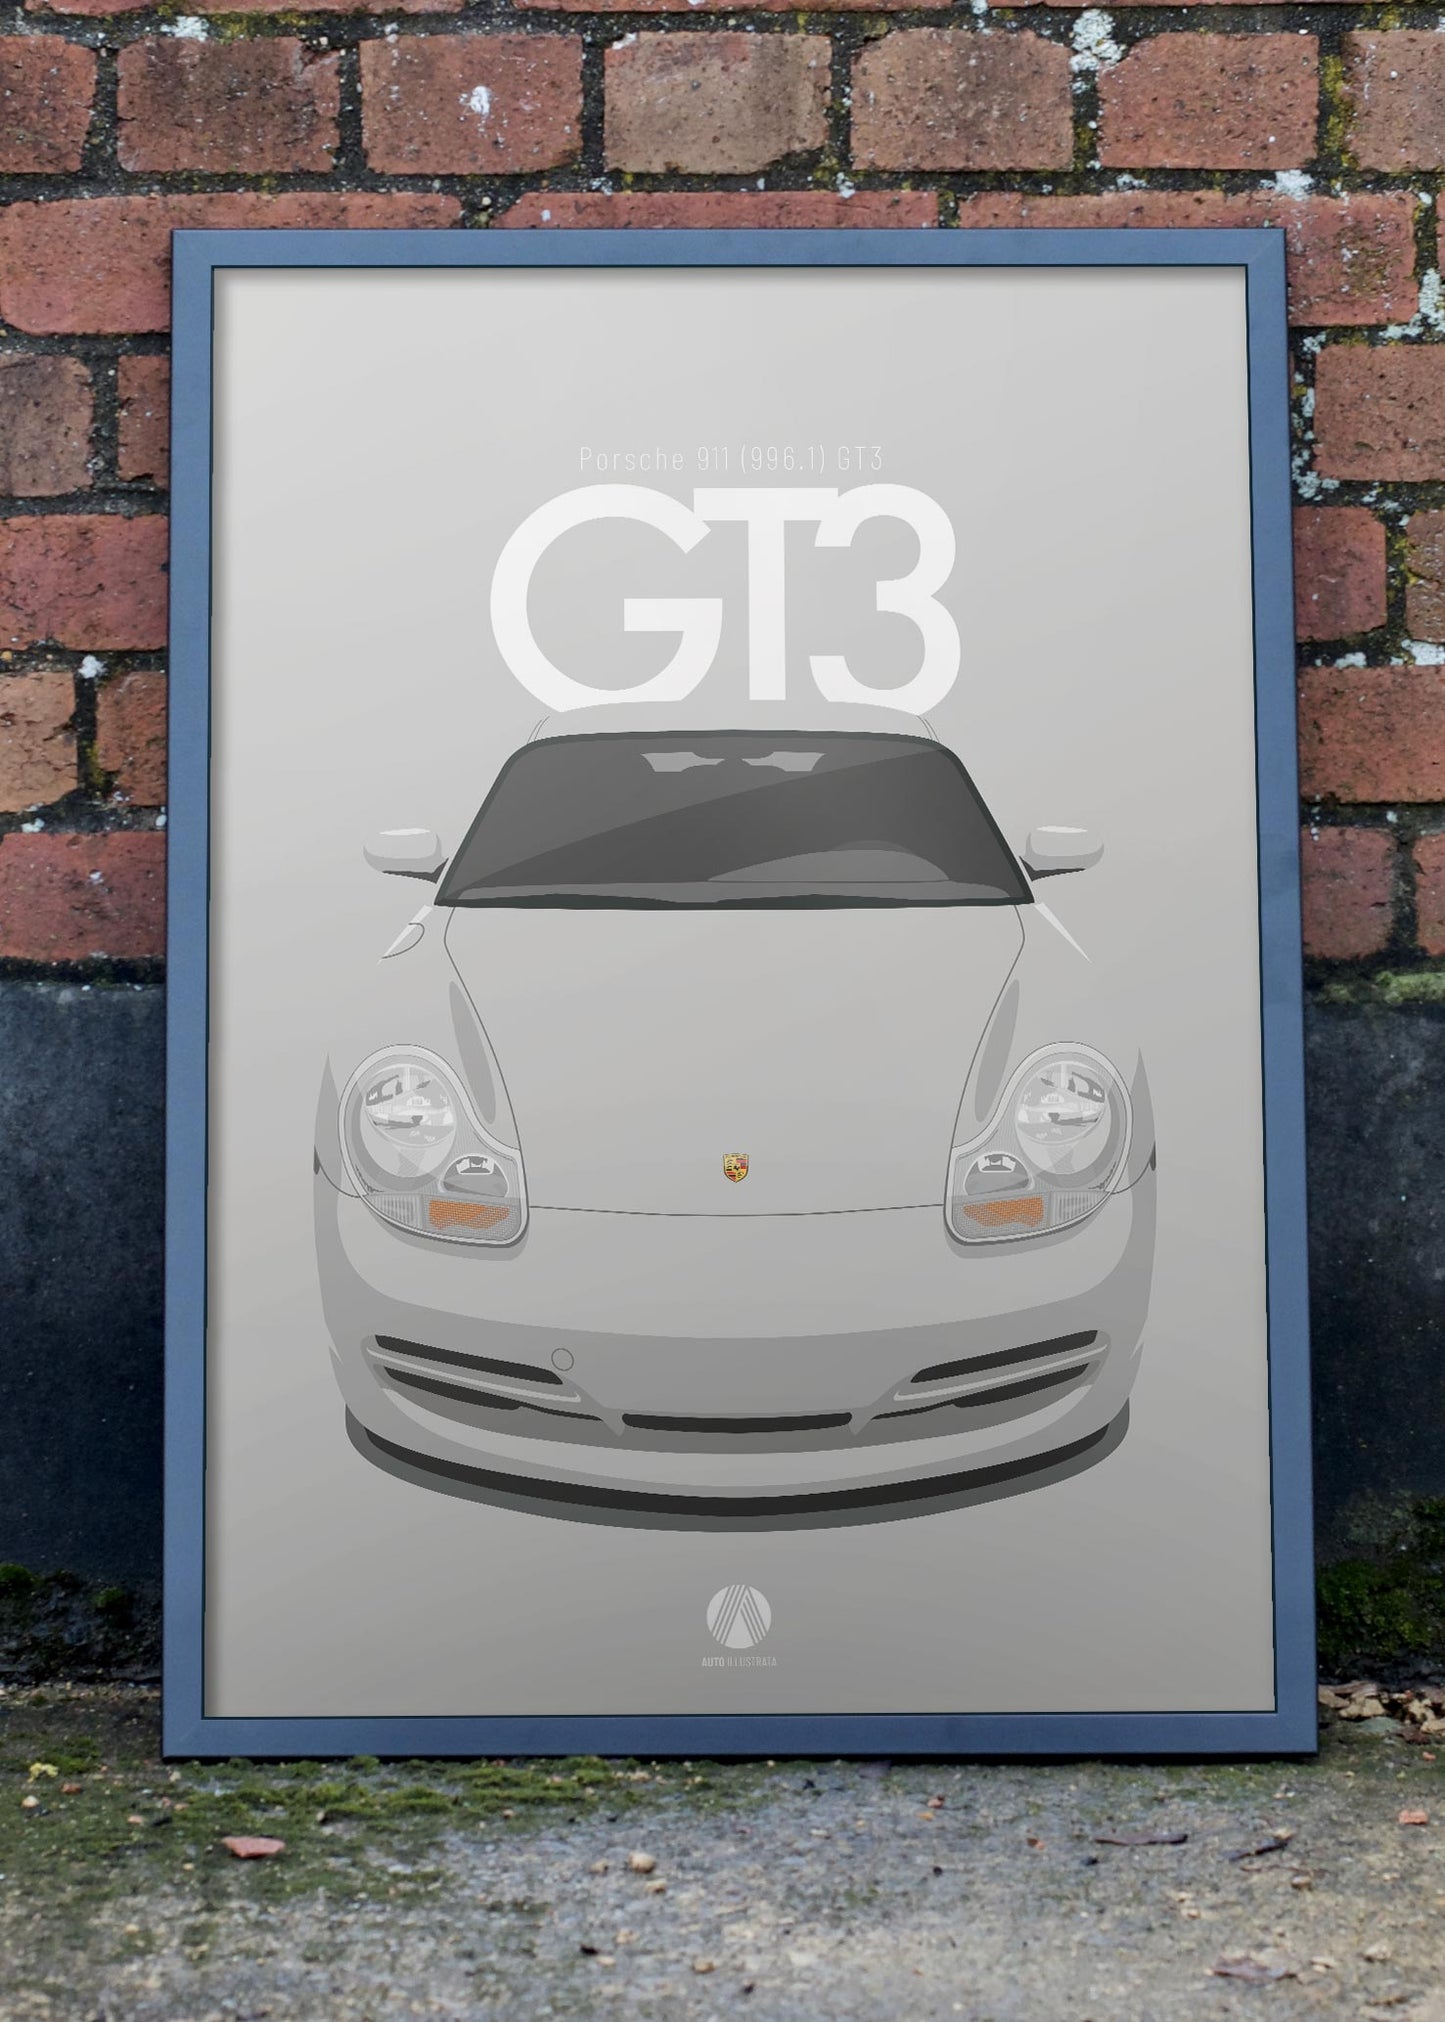 1999 Porsche 911 (996.1) GT3 Arctic Silver - poster print